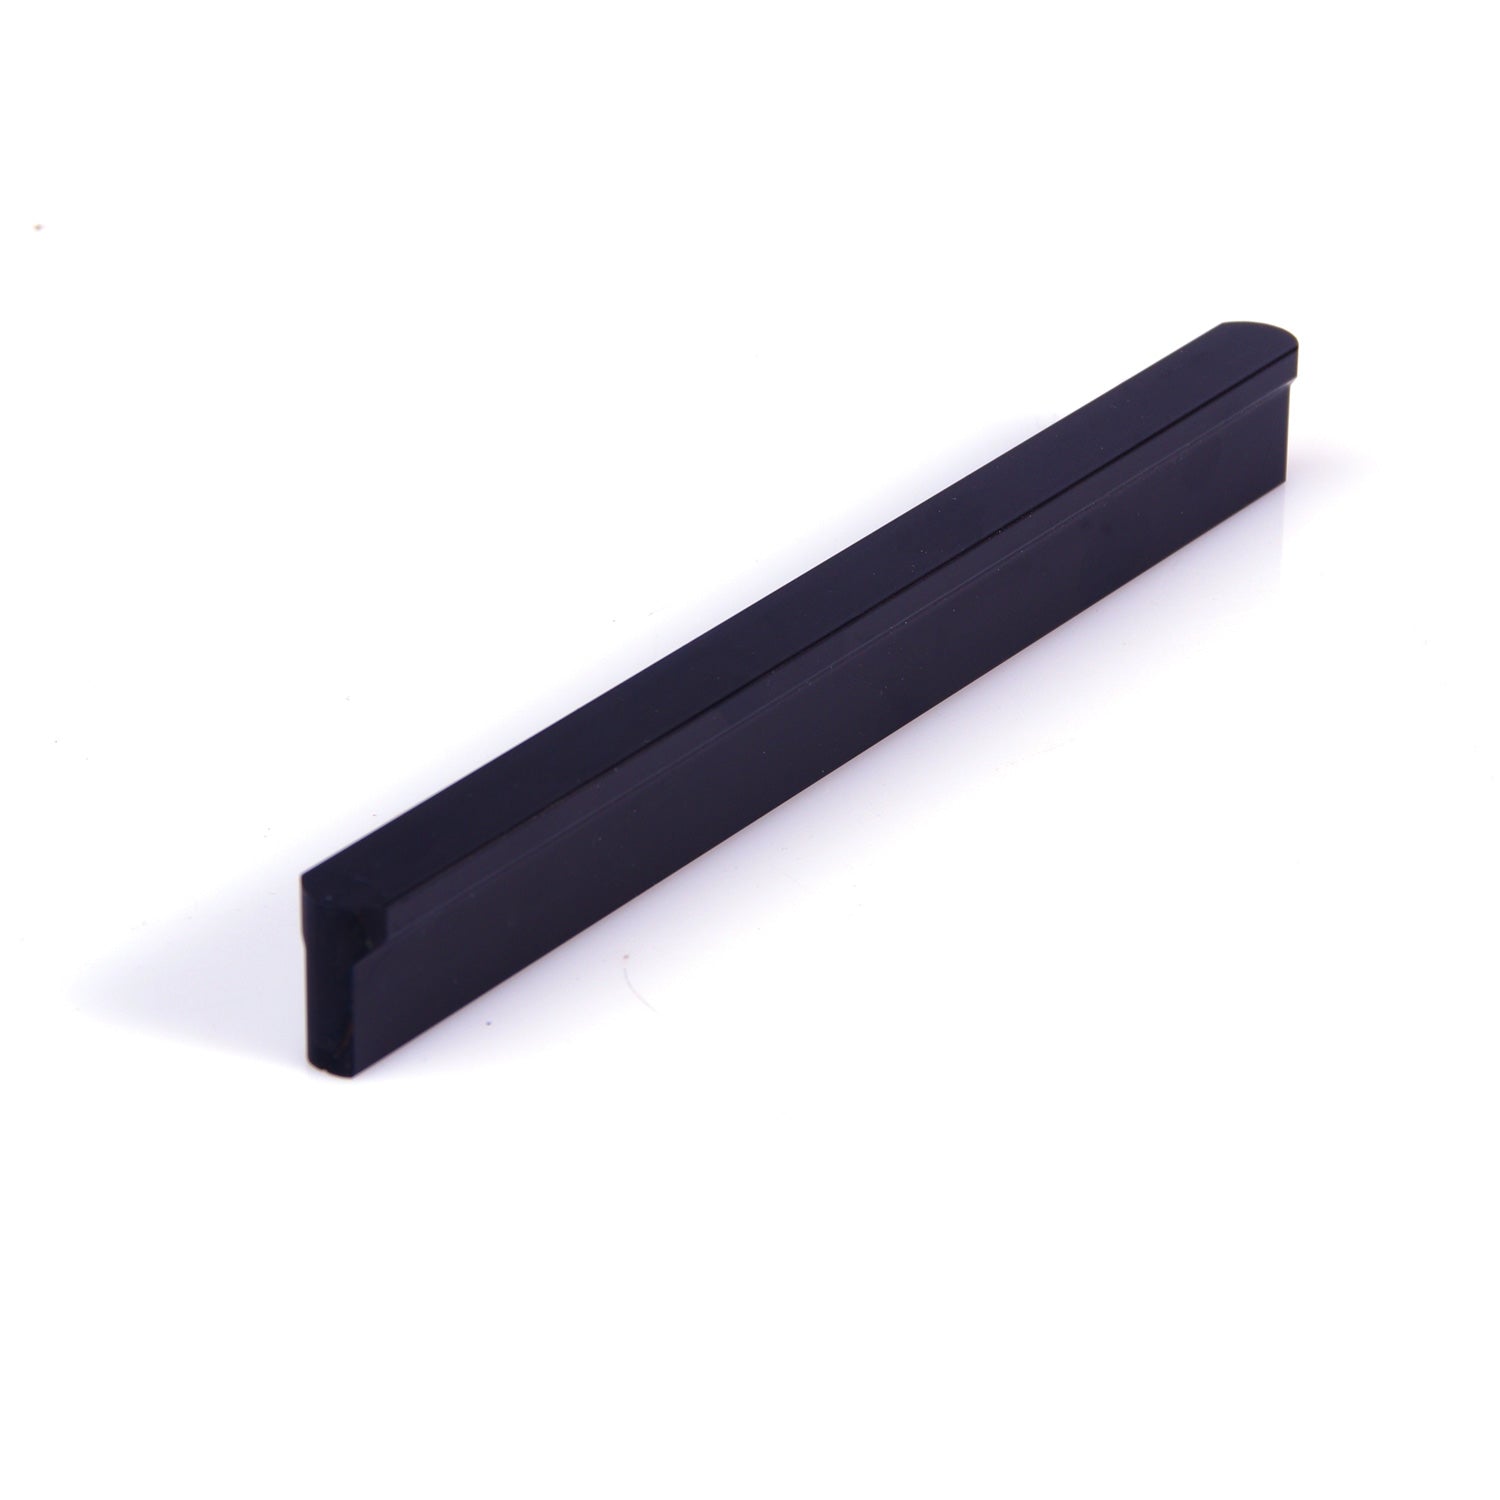 Solid Zinc Furniture Kitchen Bathroom Cabinet Handles Drawer Bar Handle Pull Knob Black 160mm Deals499